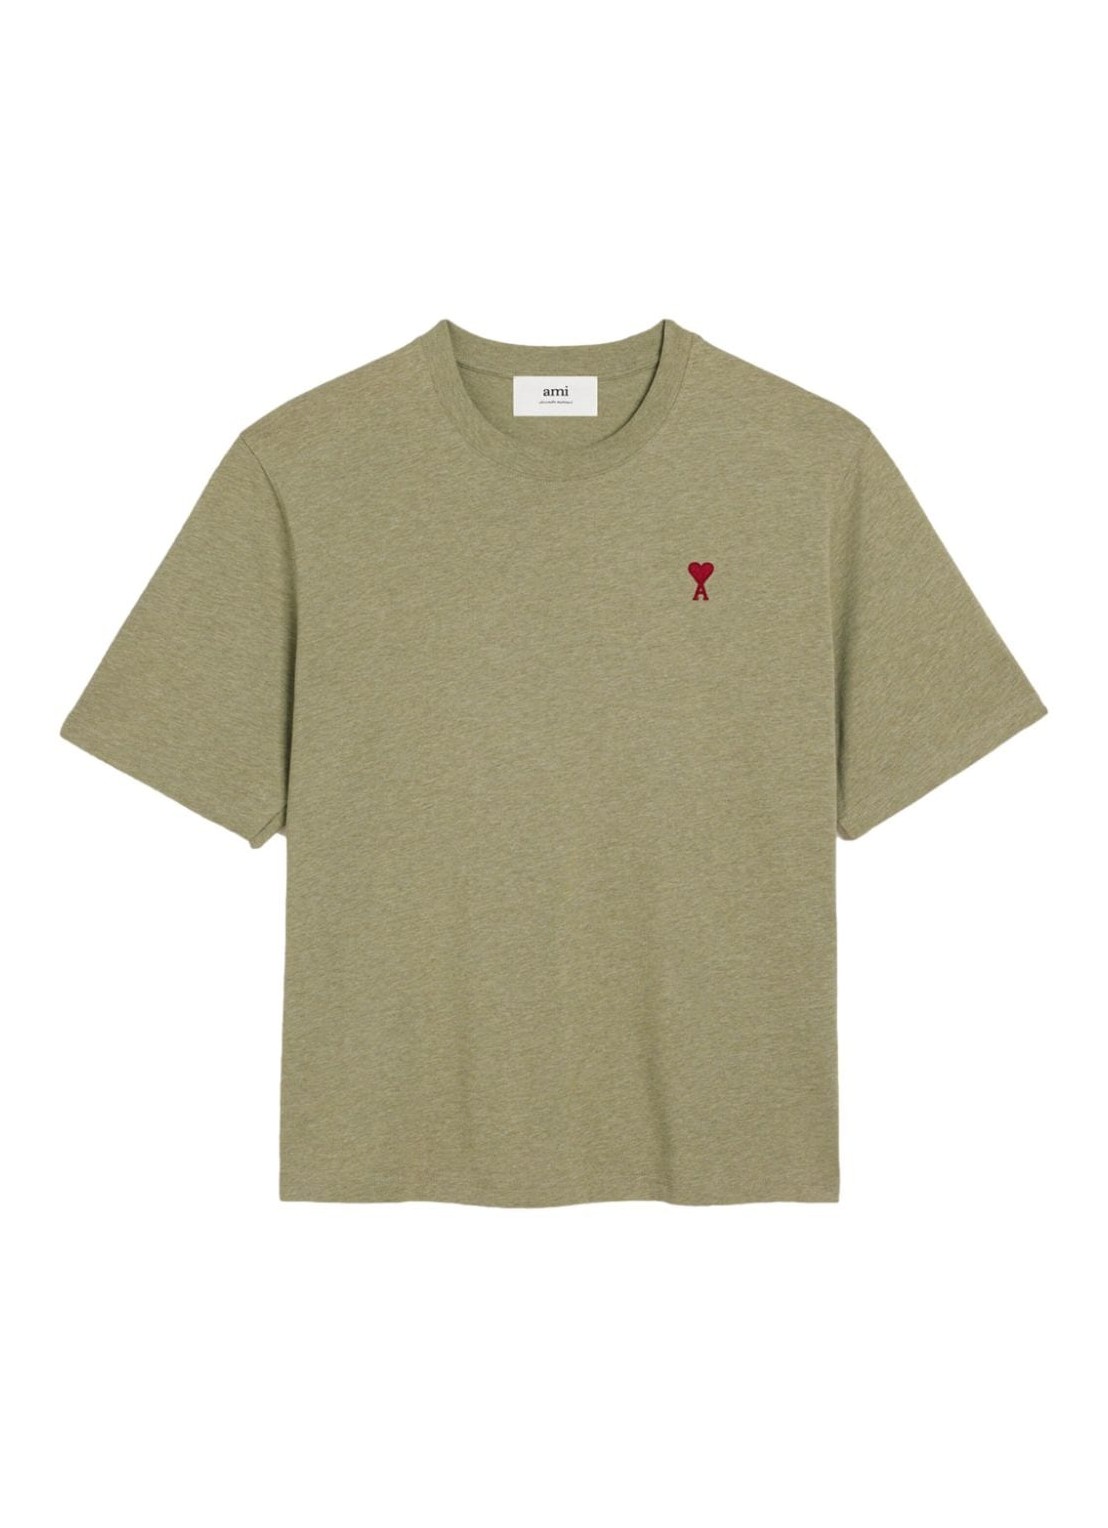 Camiseta ami t-shirt man red ami de coeur tshirt uts005726 366 talla verde
 